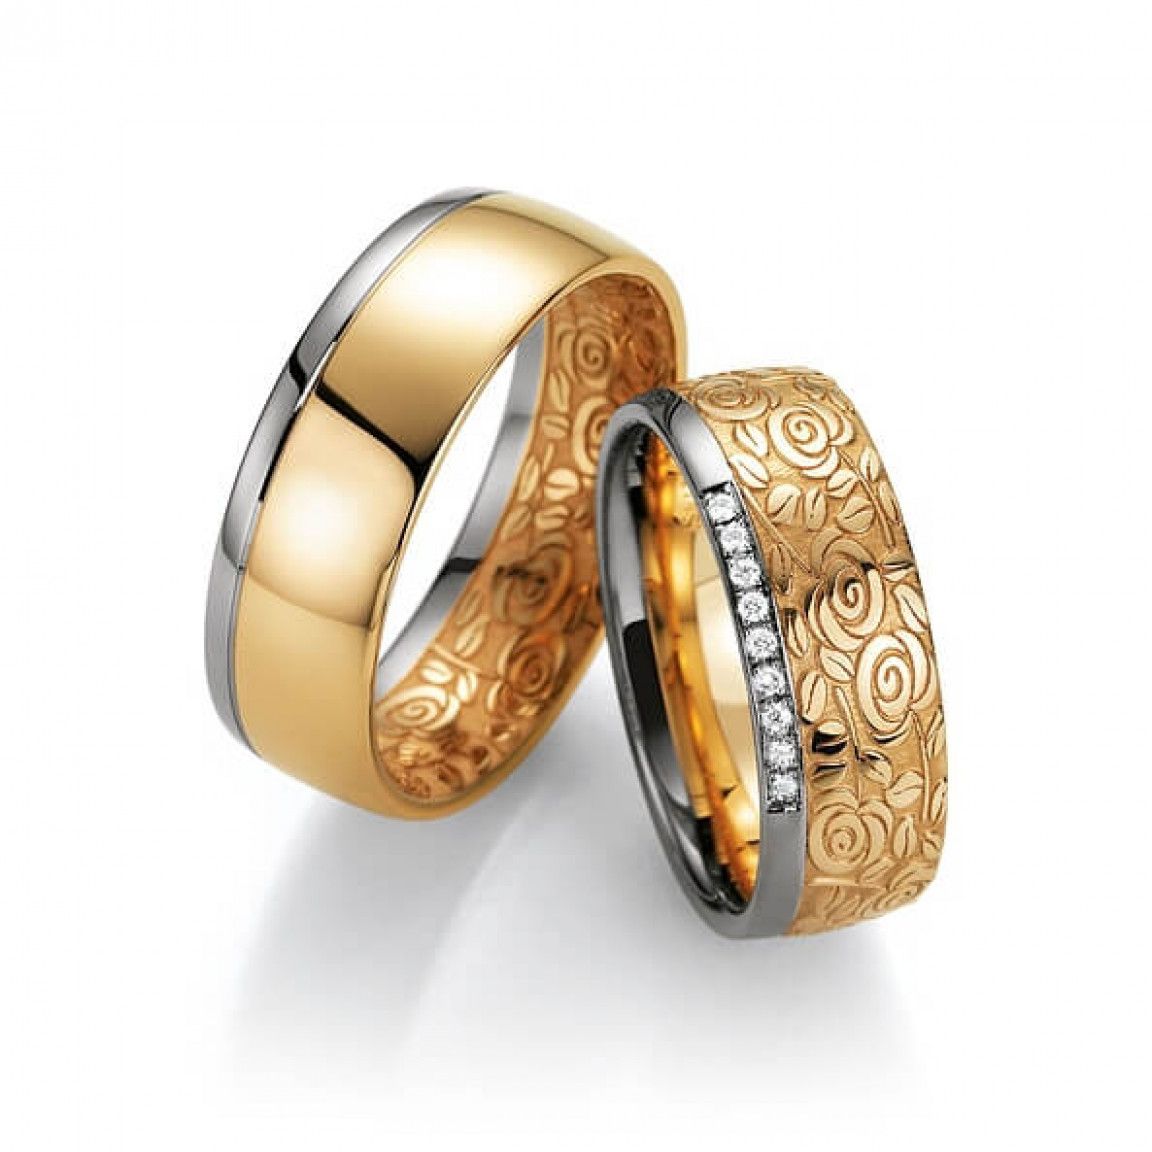 Fischer German Made Wedding Rings